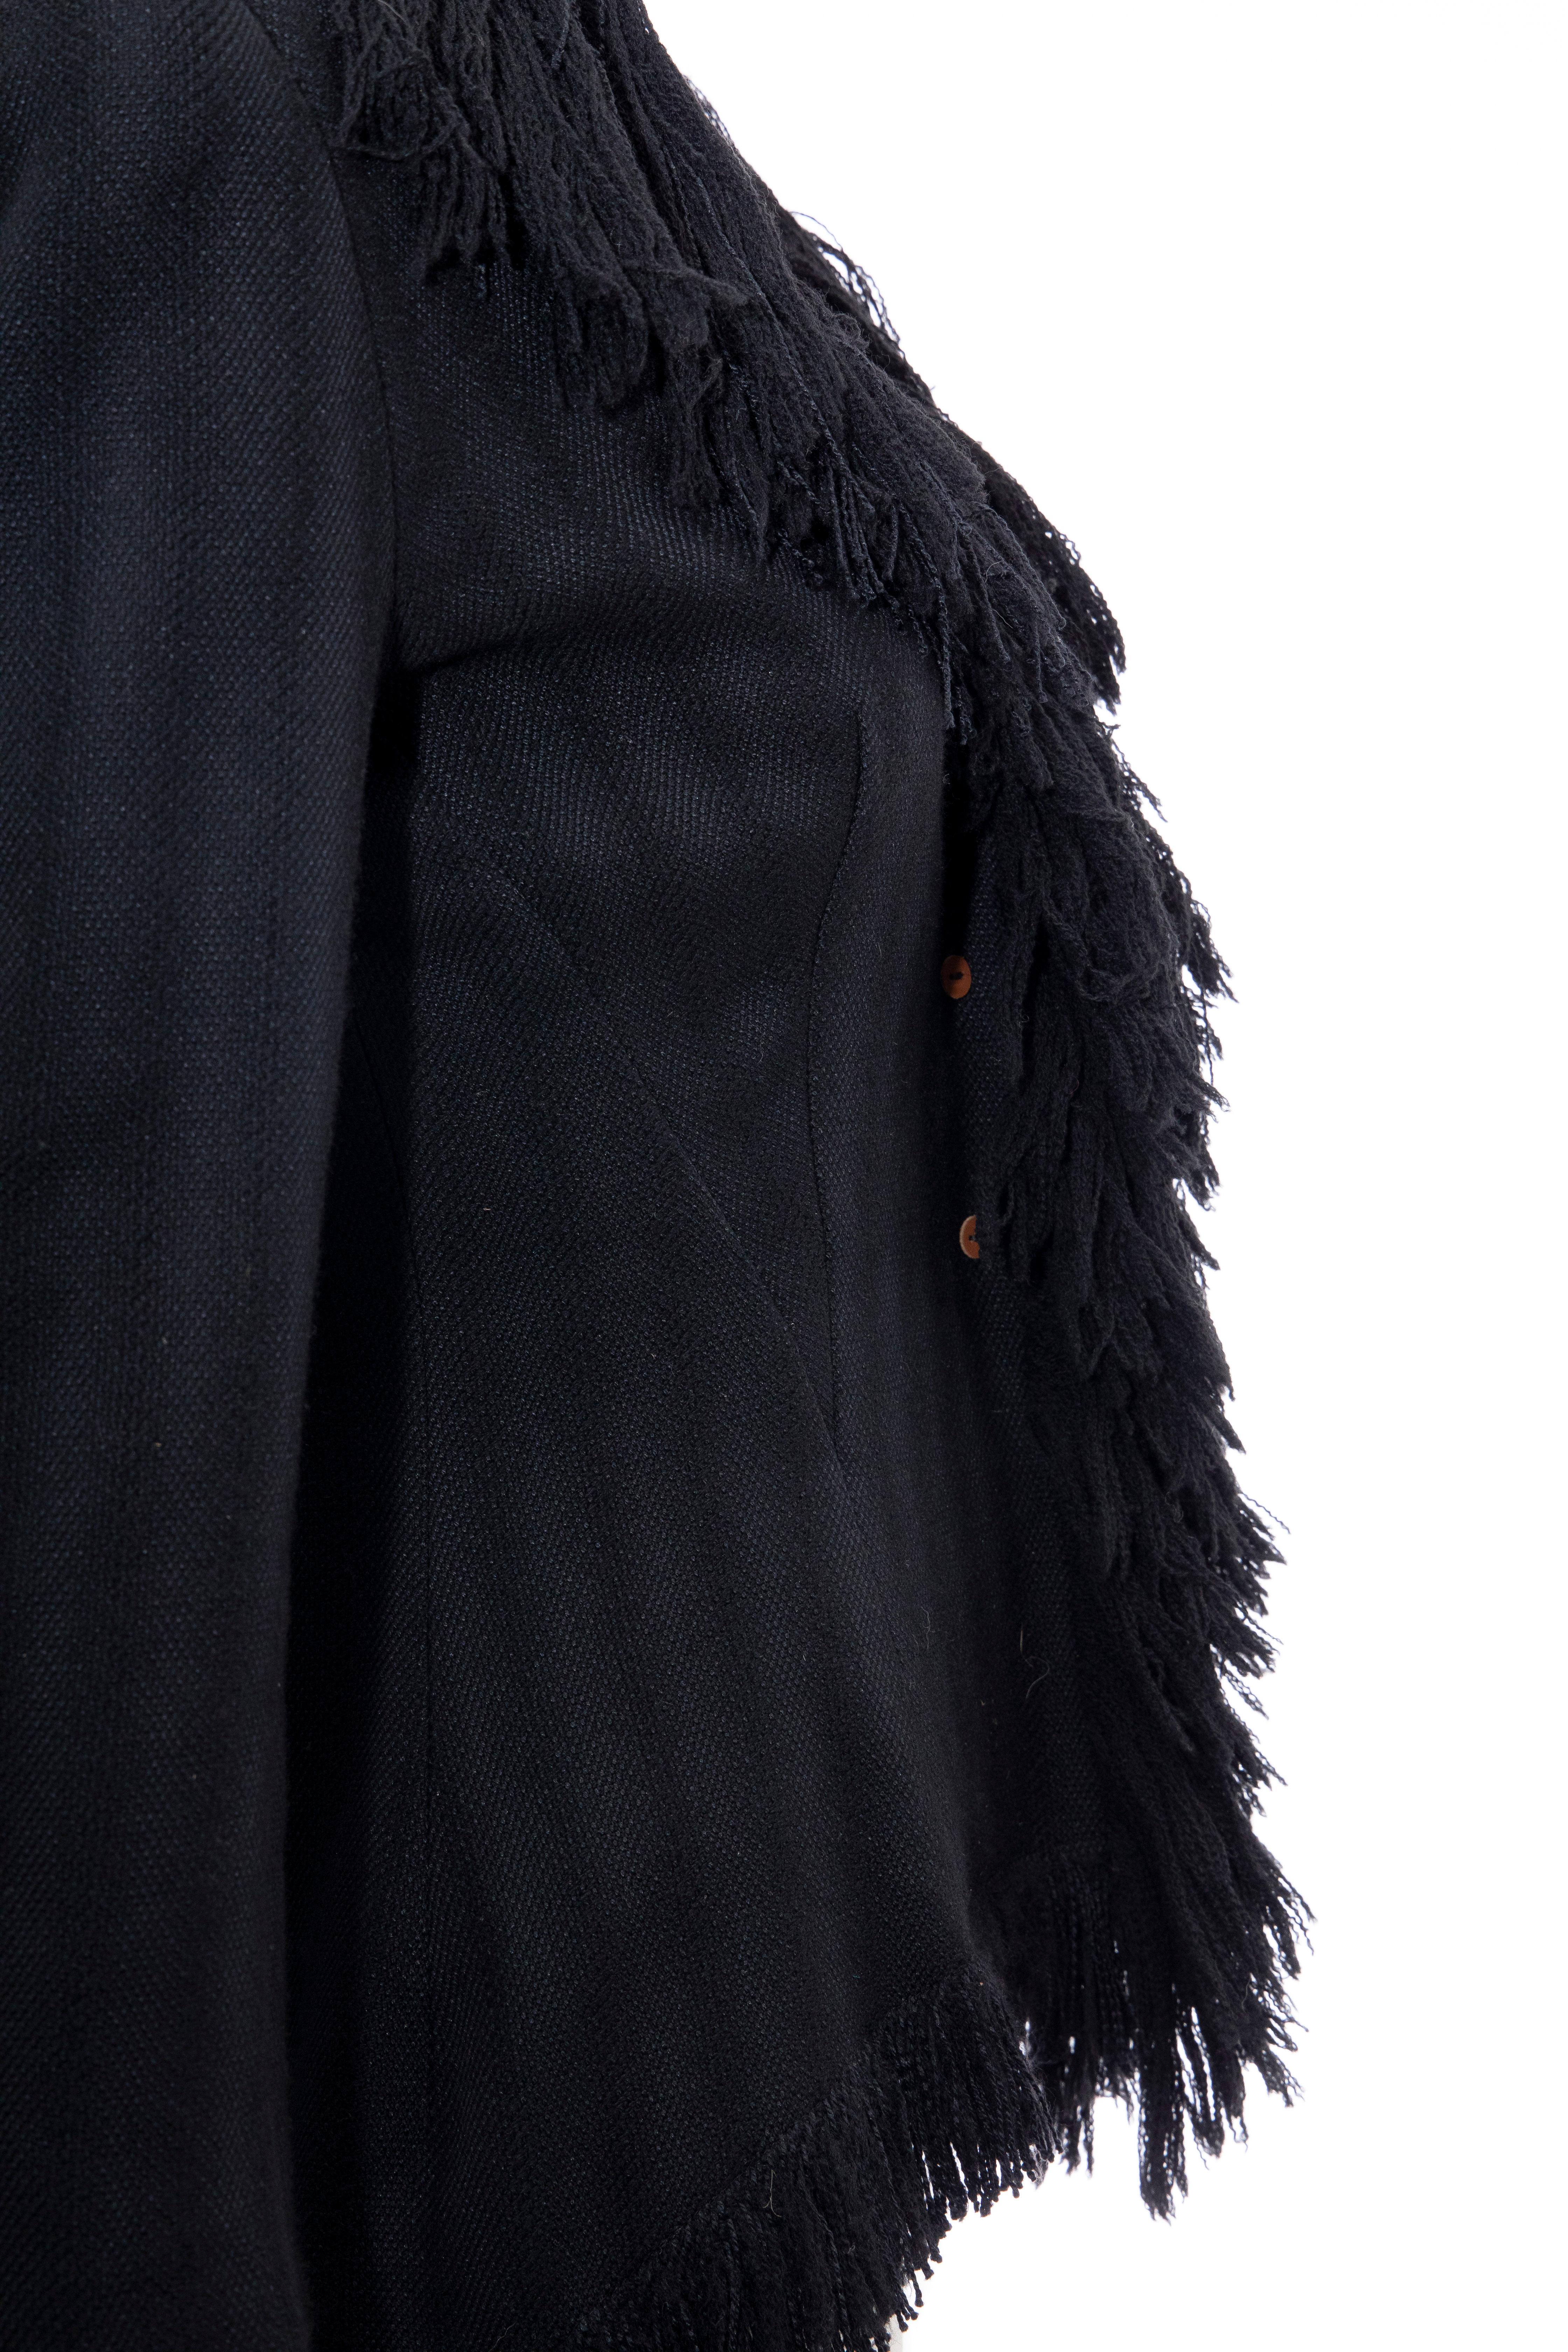 Yohji Yamamoto Runway Black Silk Wool Tweed Fringe Cutaway Jacket, Fall 2013 For Sale 2